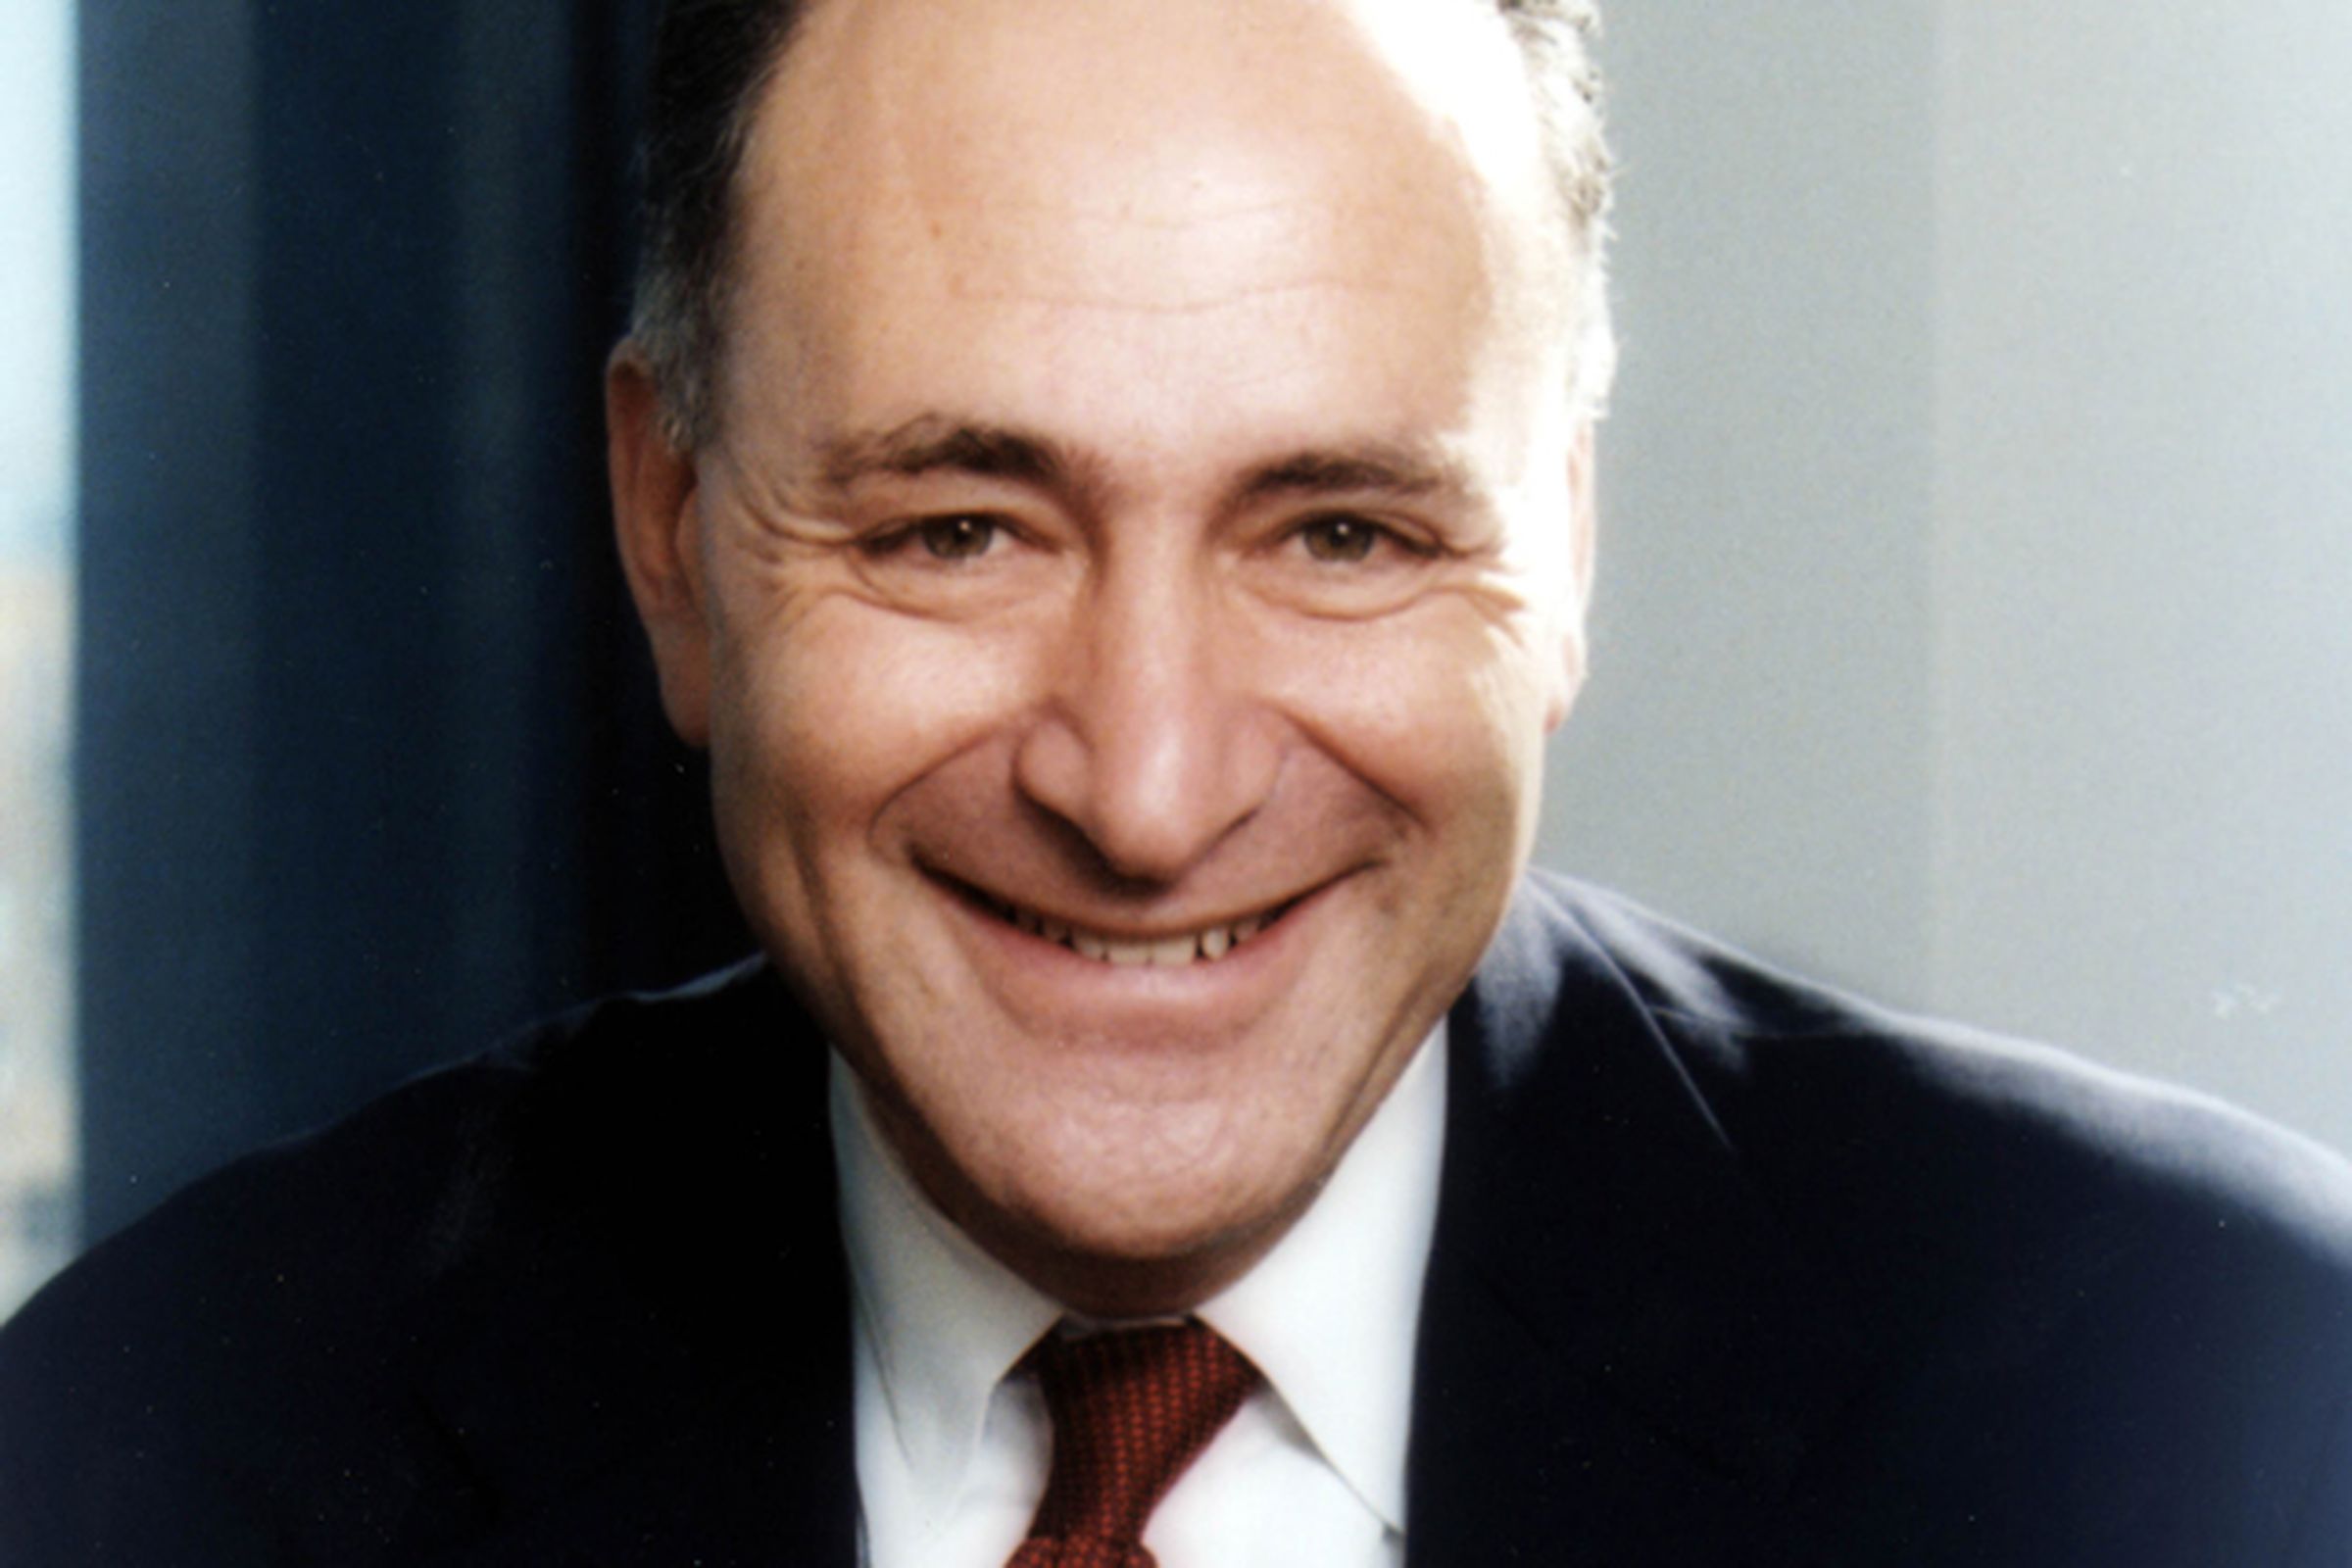 Senator Charles Schumer